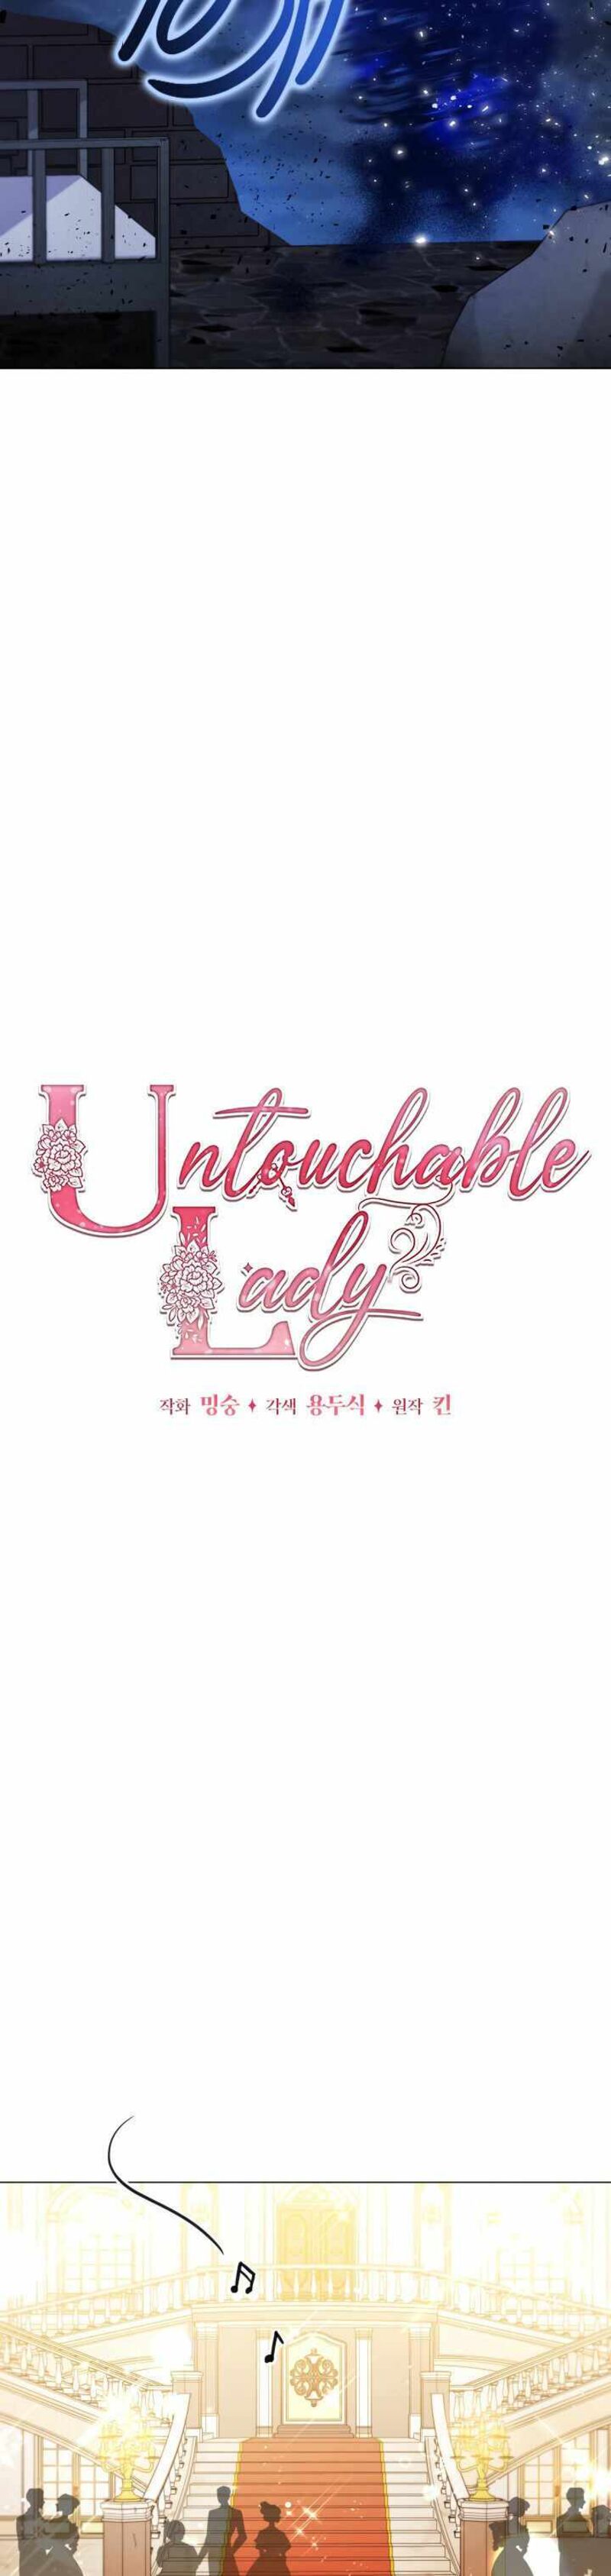 Untouchable Lady 11 14